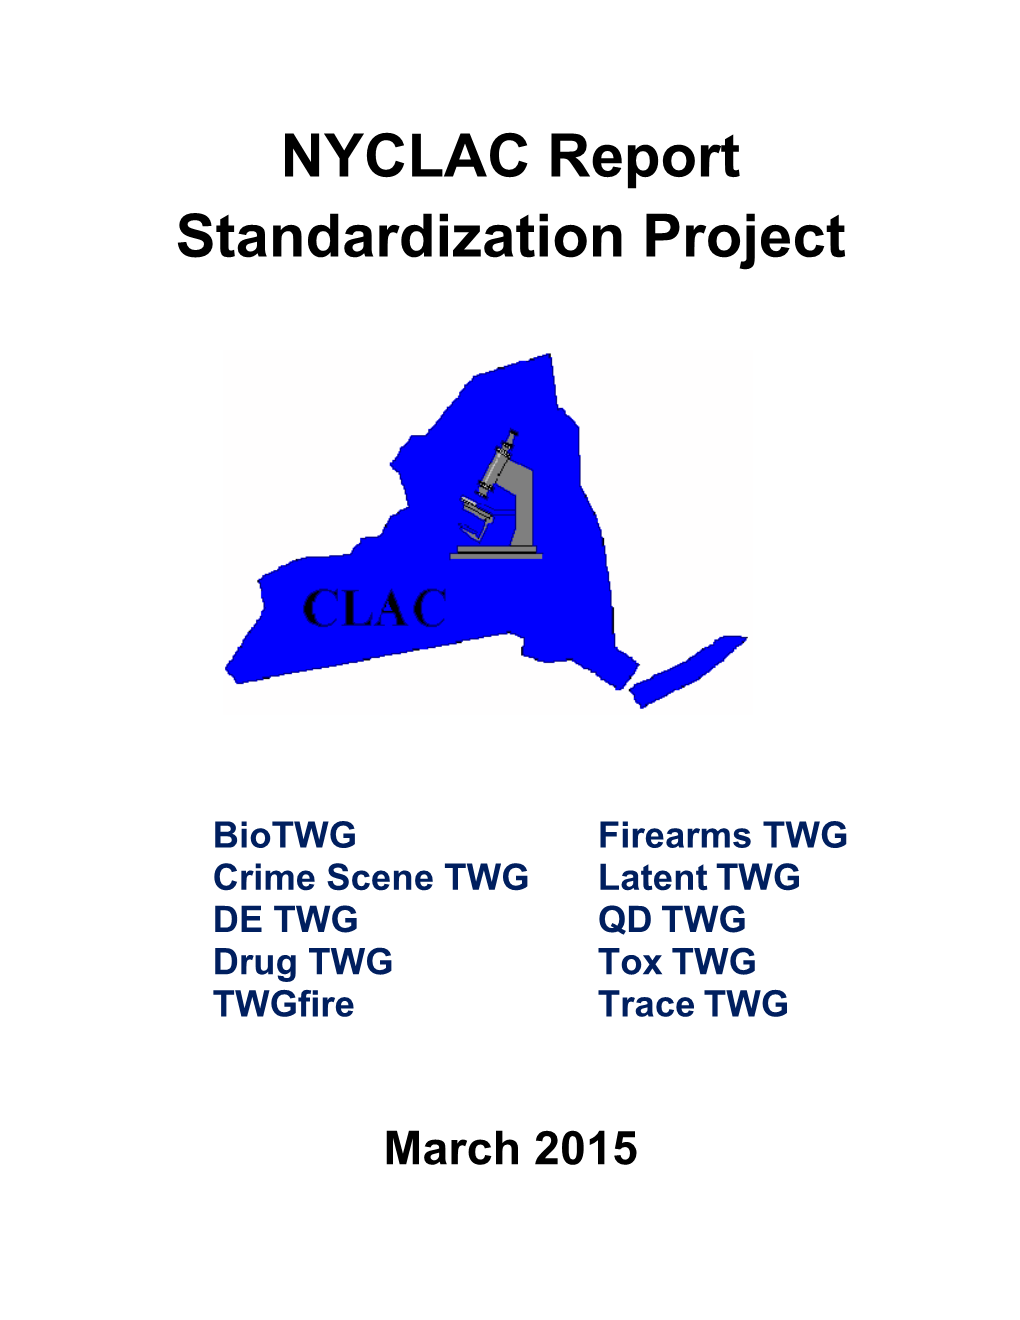 NYCLAC Report Standardization Project